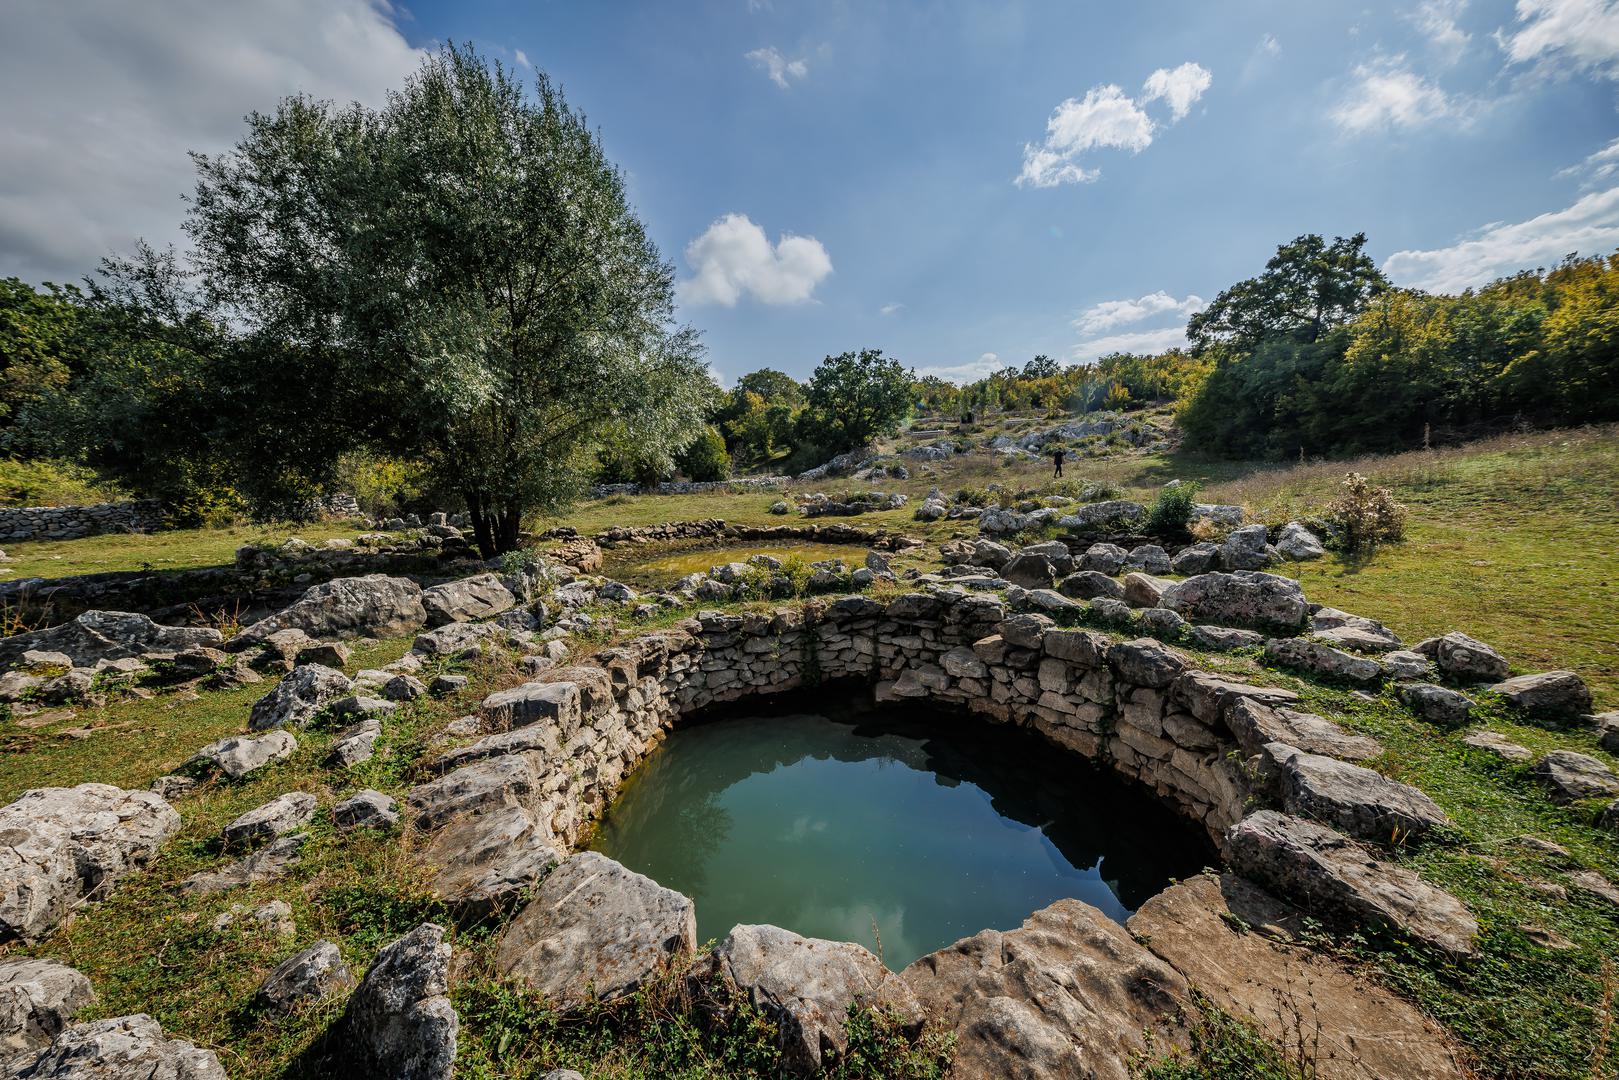 Nedaleko od Splita, na nepristupačnom terenu Kliške zagore, skriva se jedno od najslikovitijih, ali i najmisterioznijih mjesta Hrvatske - bunari Rajčica. 